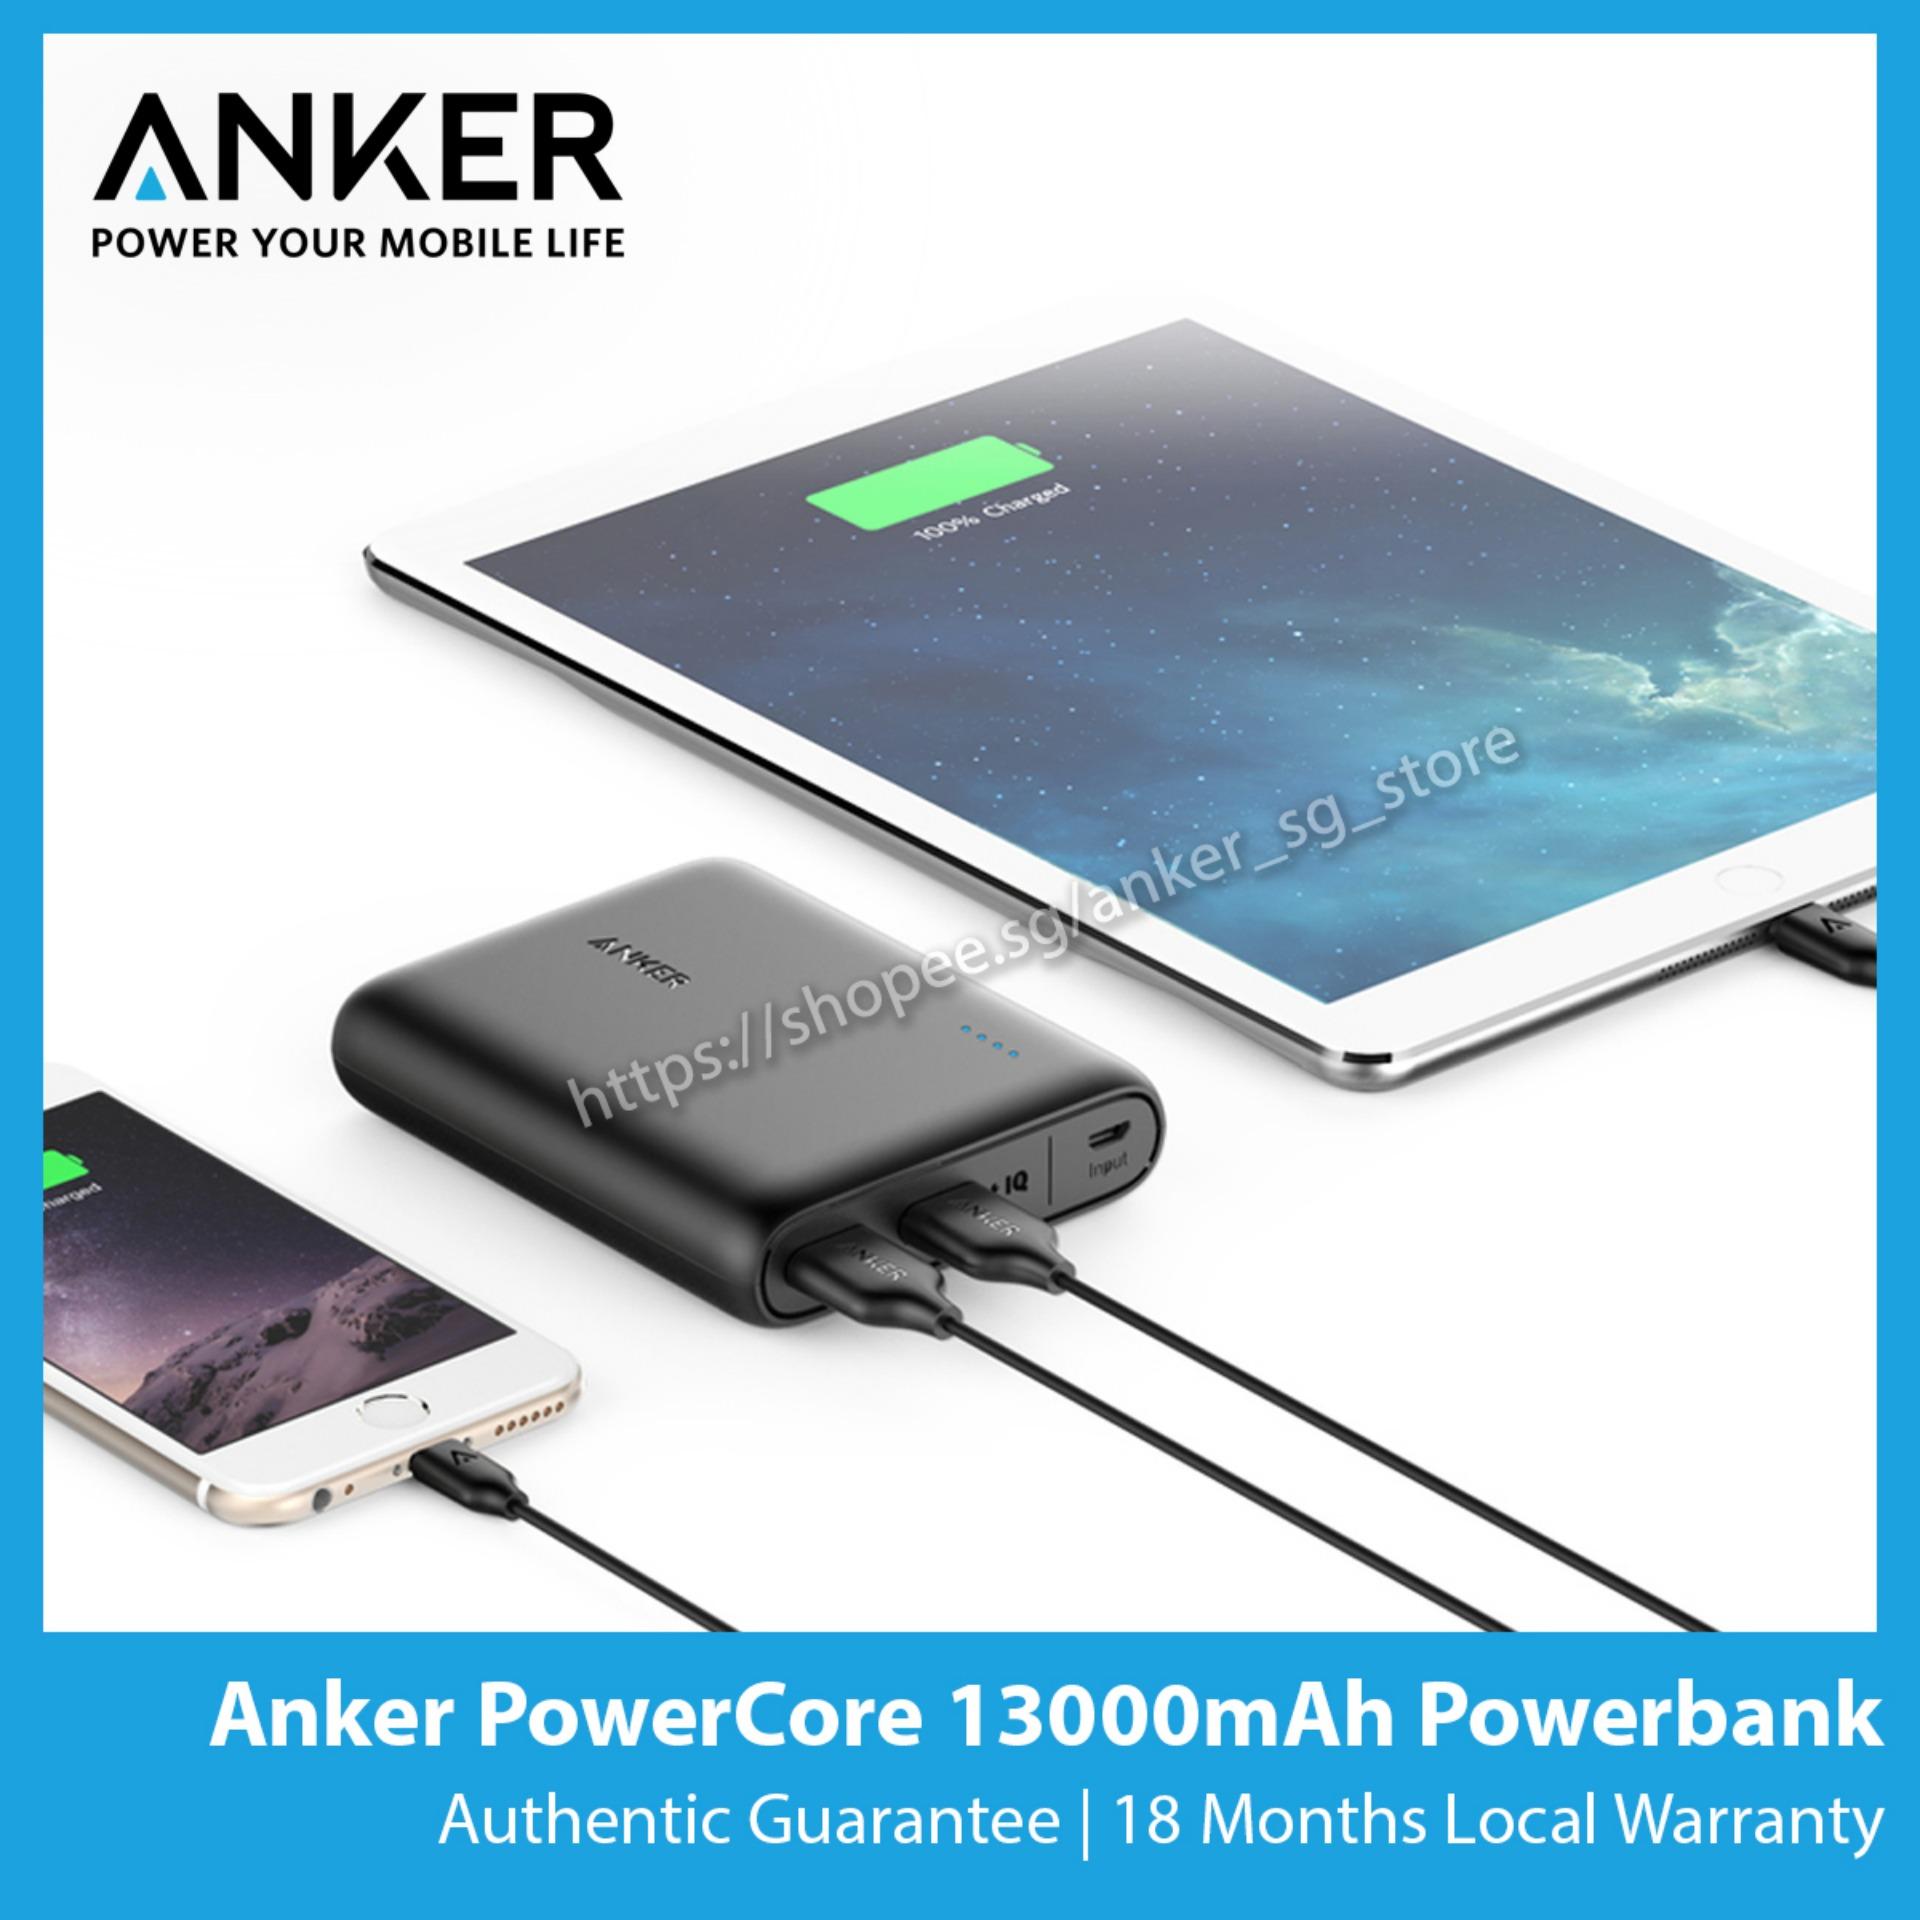 Anker PowerCore 13000mAh Portable Powerbank